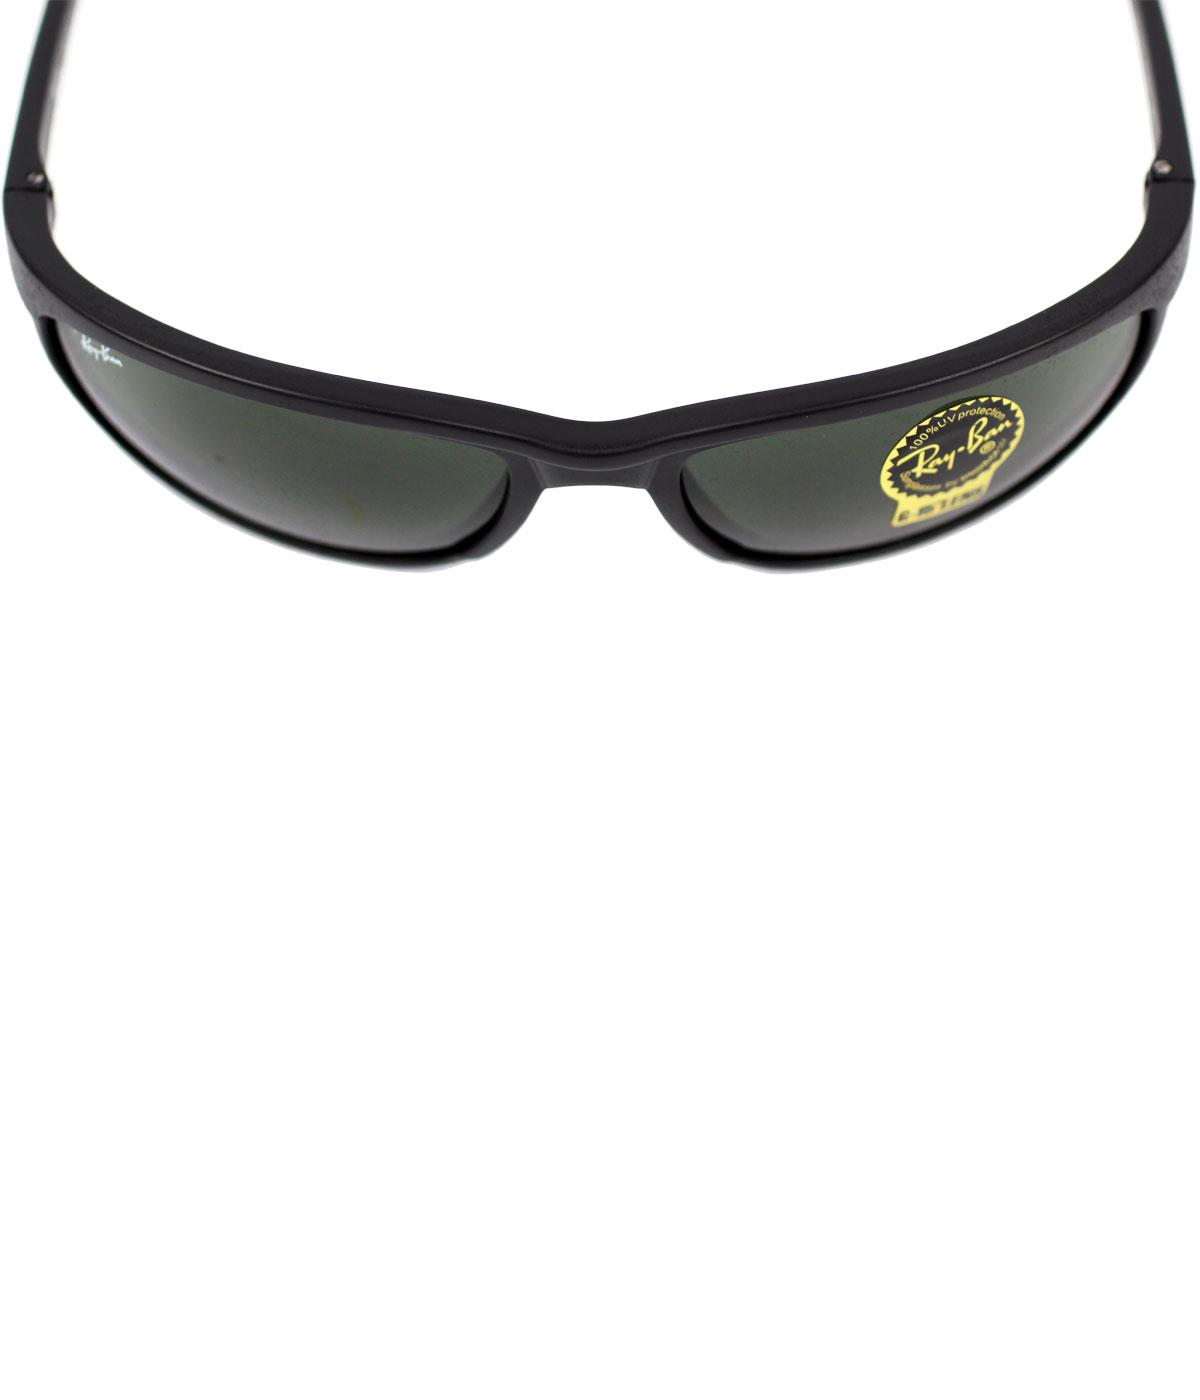 Ray Ban Predator Retro G 15 Green Lens Wrap Round Sunglasses